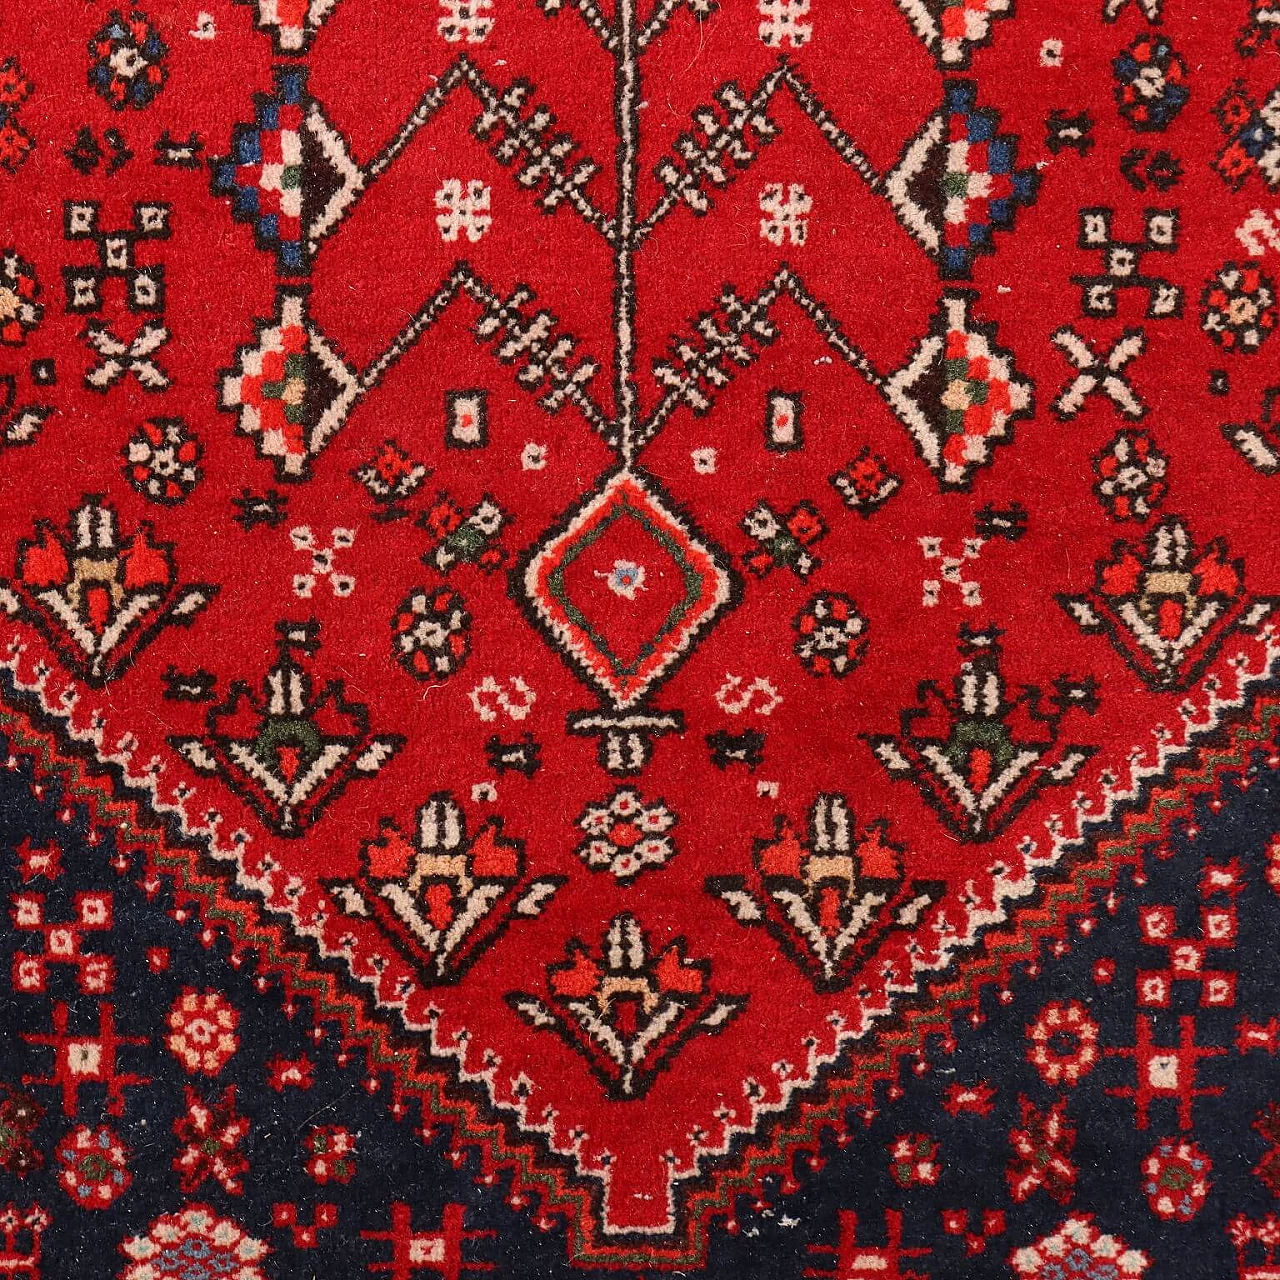 Iranian cotton and wool Kaskay rug 4